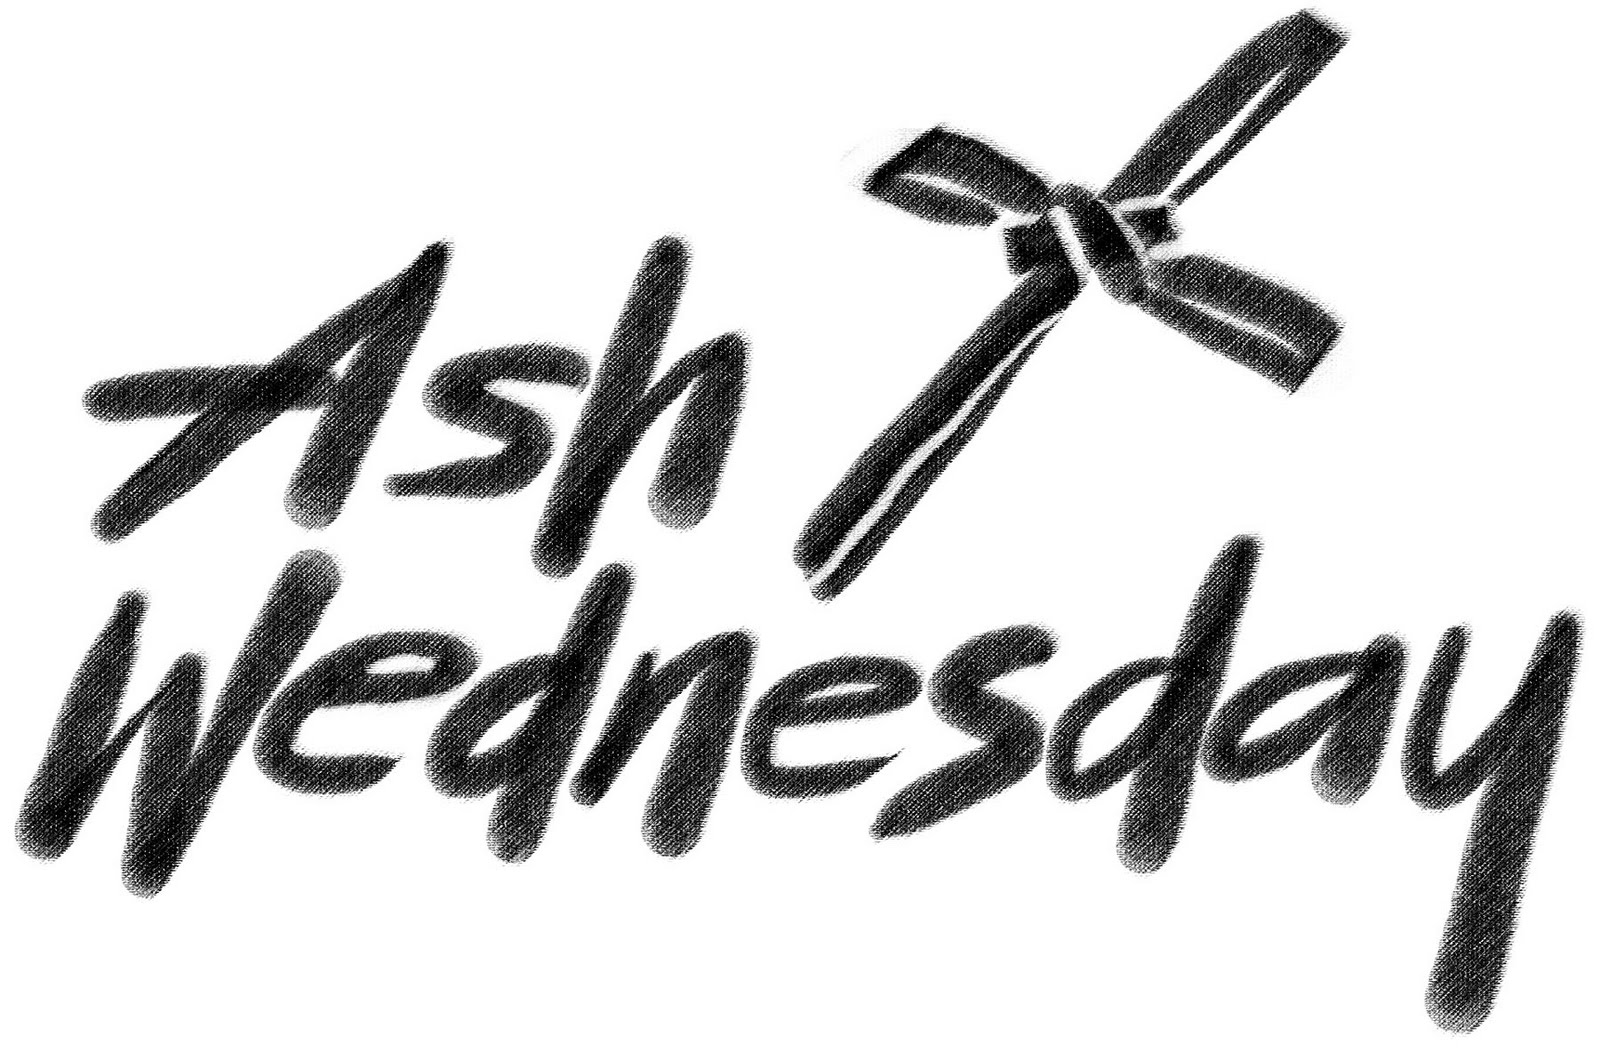 ... Ash Wednesday Clip Art Fr